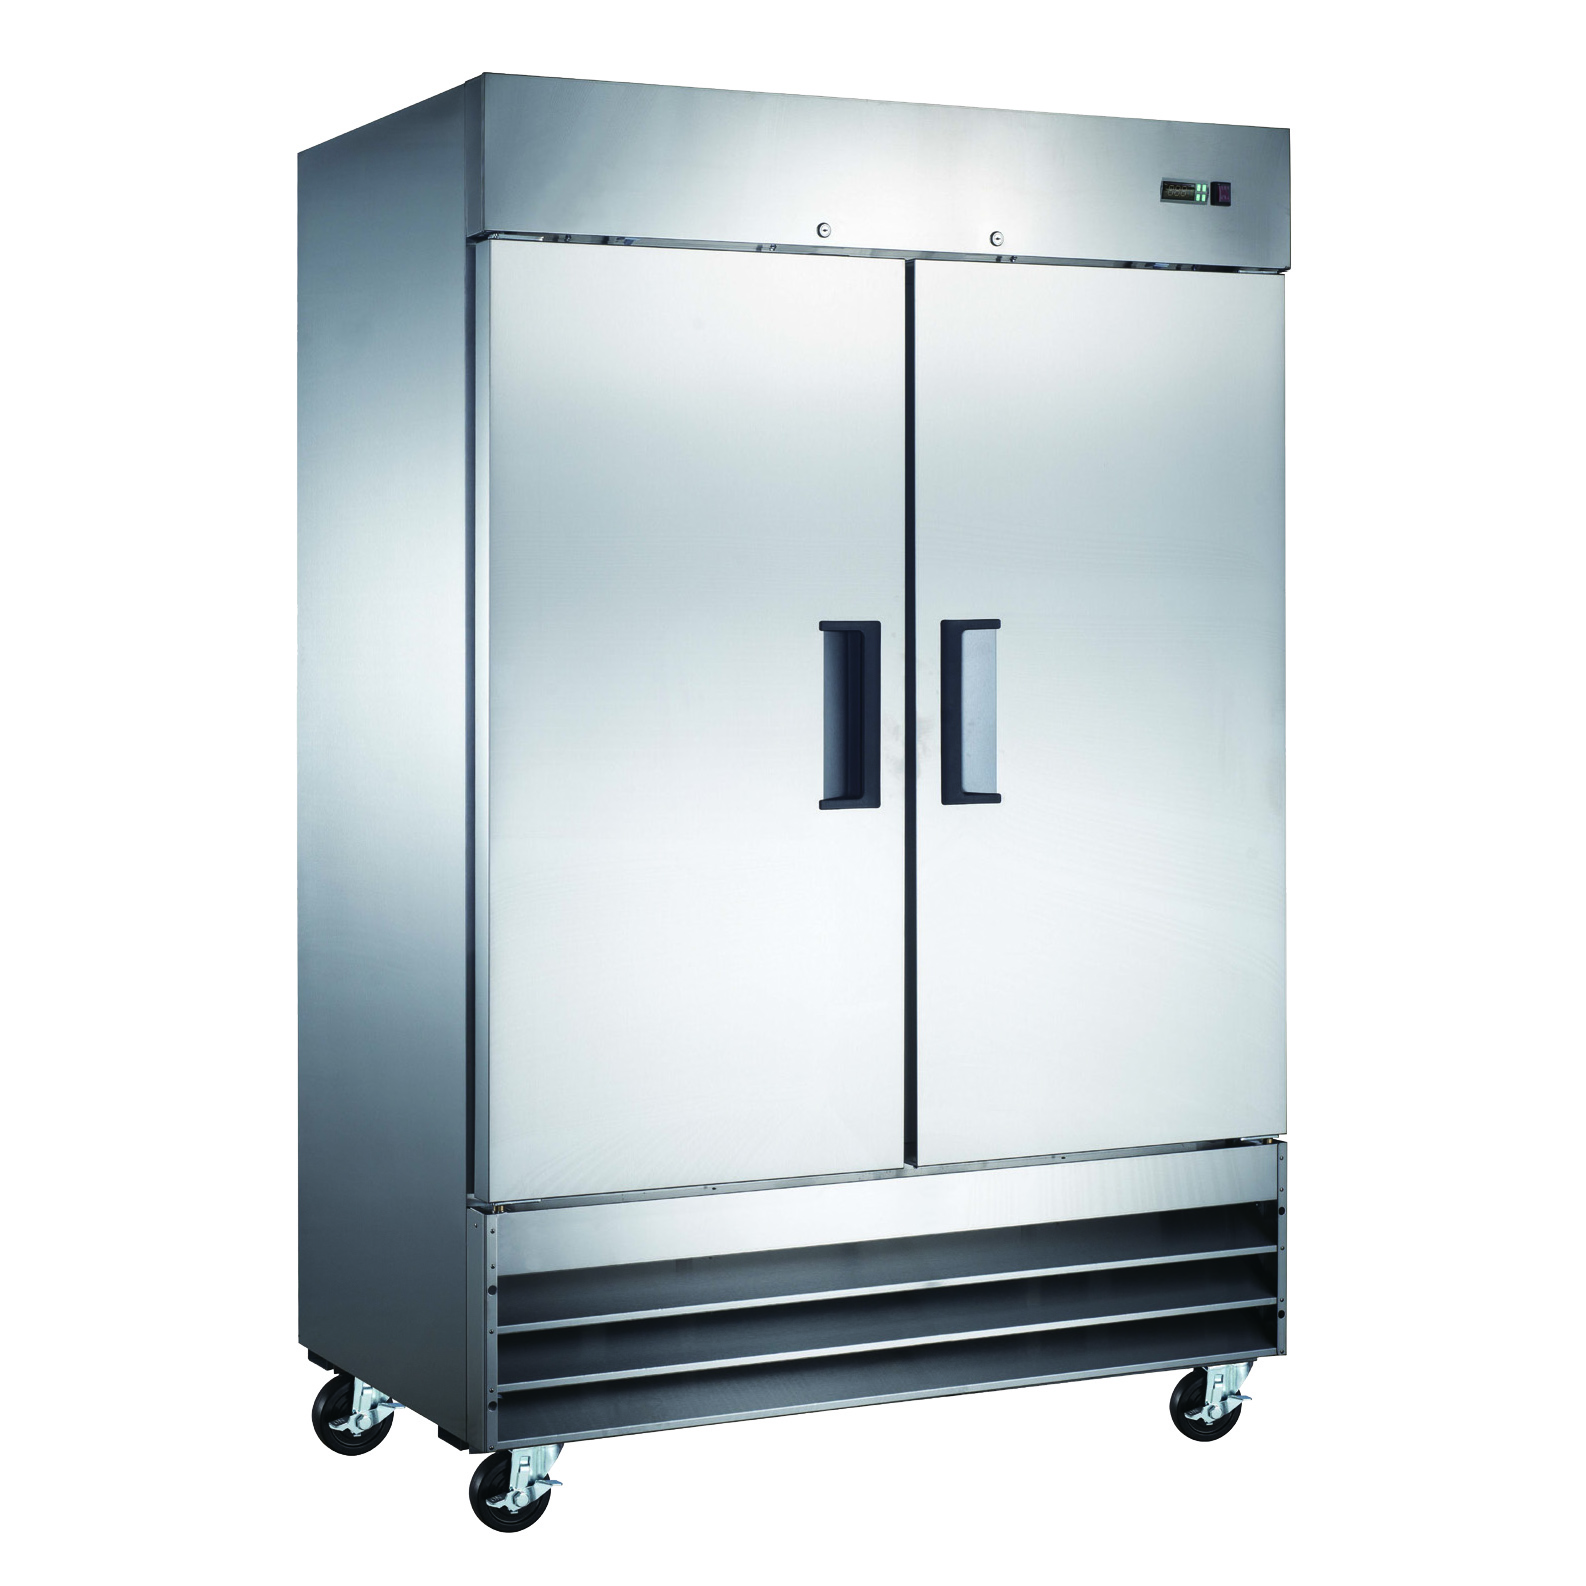 Omcan USA 50026 Reach-In Refrigerator